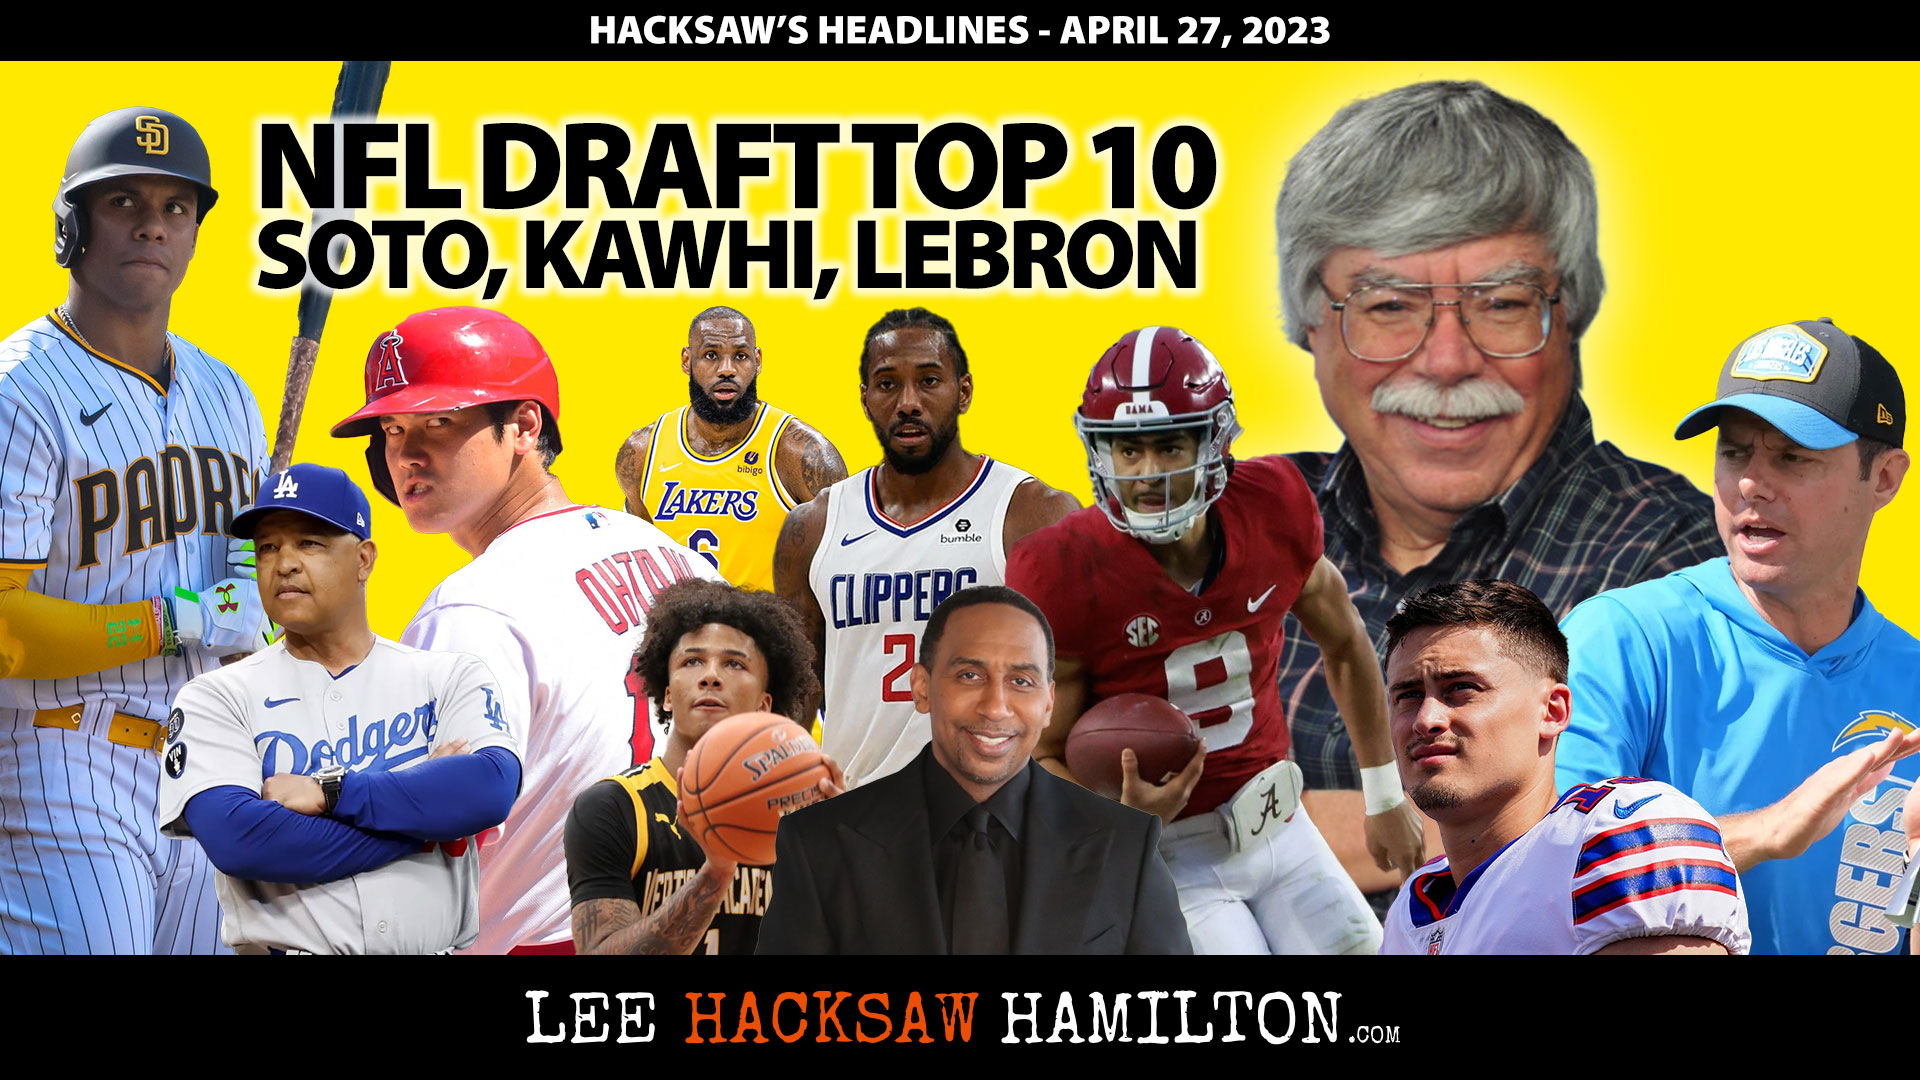 Lee Hacksaw Hamilton discusses NFL Draft Top 10, Chargers, Juan Soto, Shohei Ohtani, Kawhi Leonard